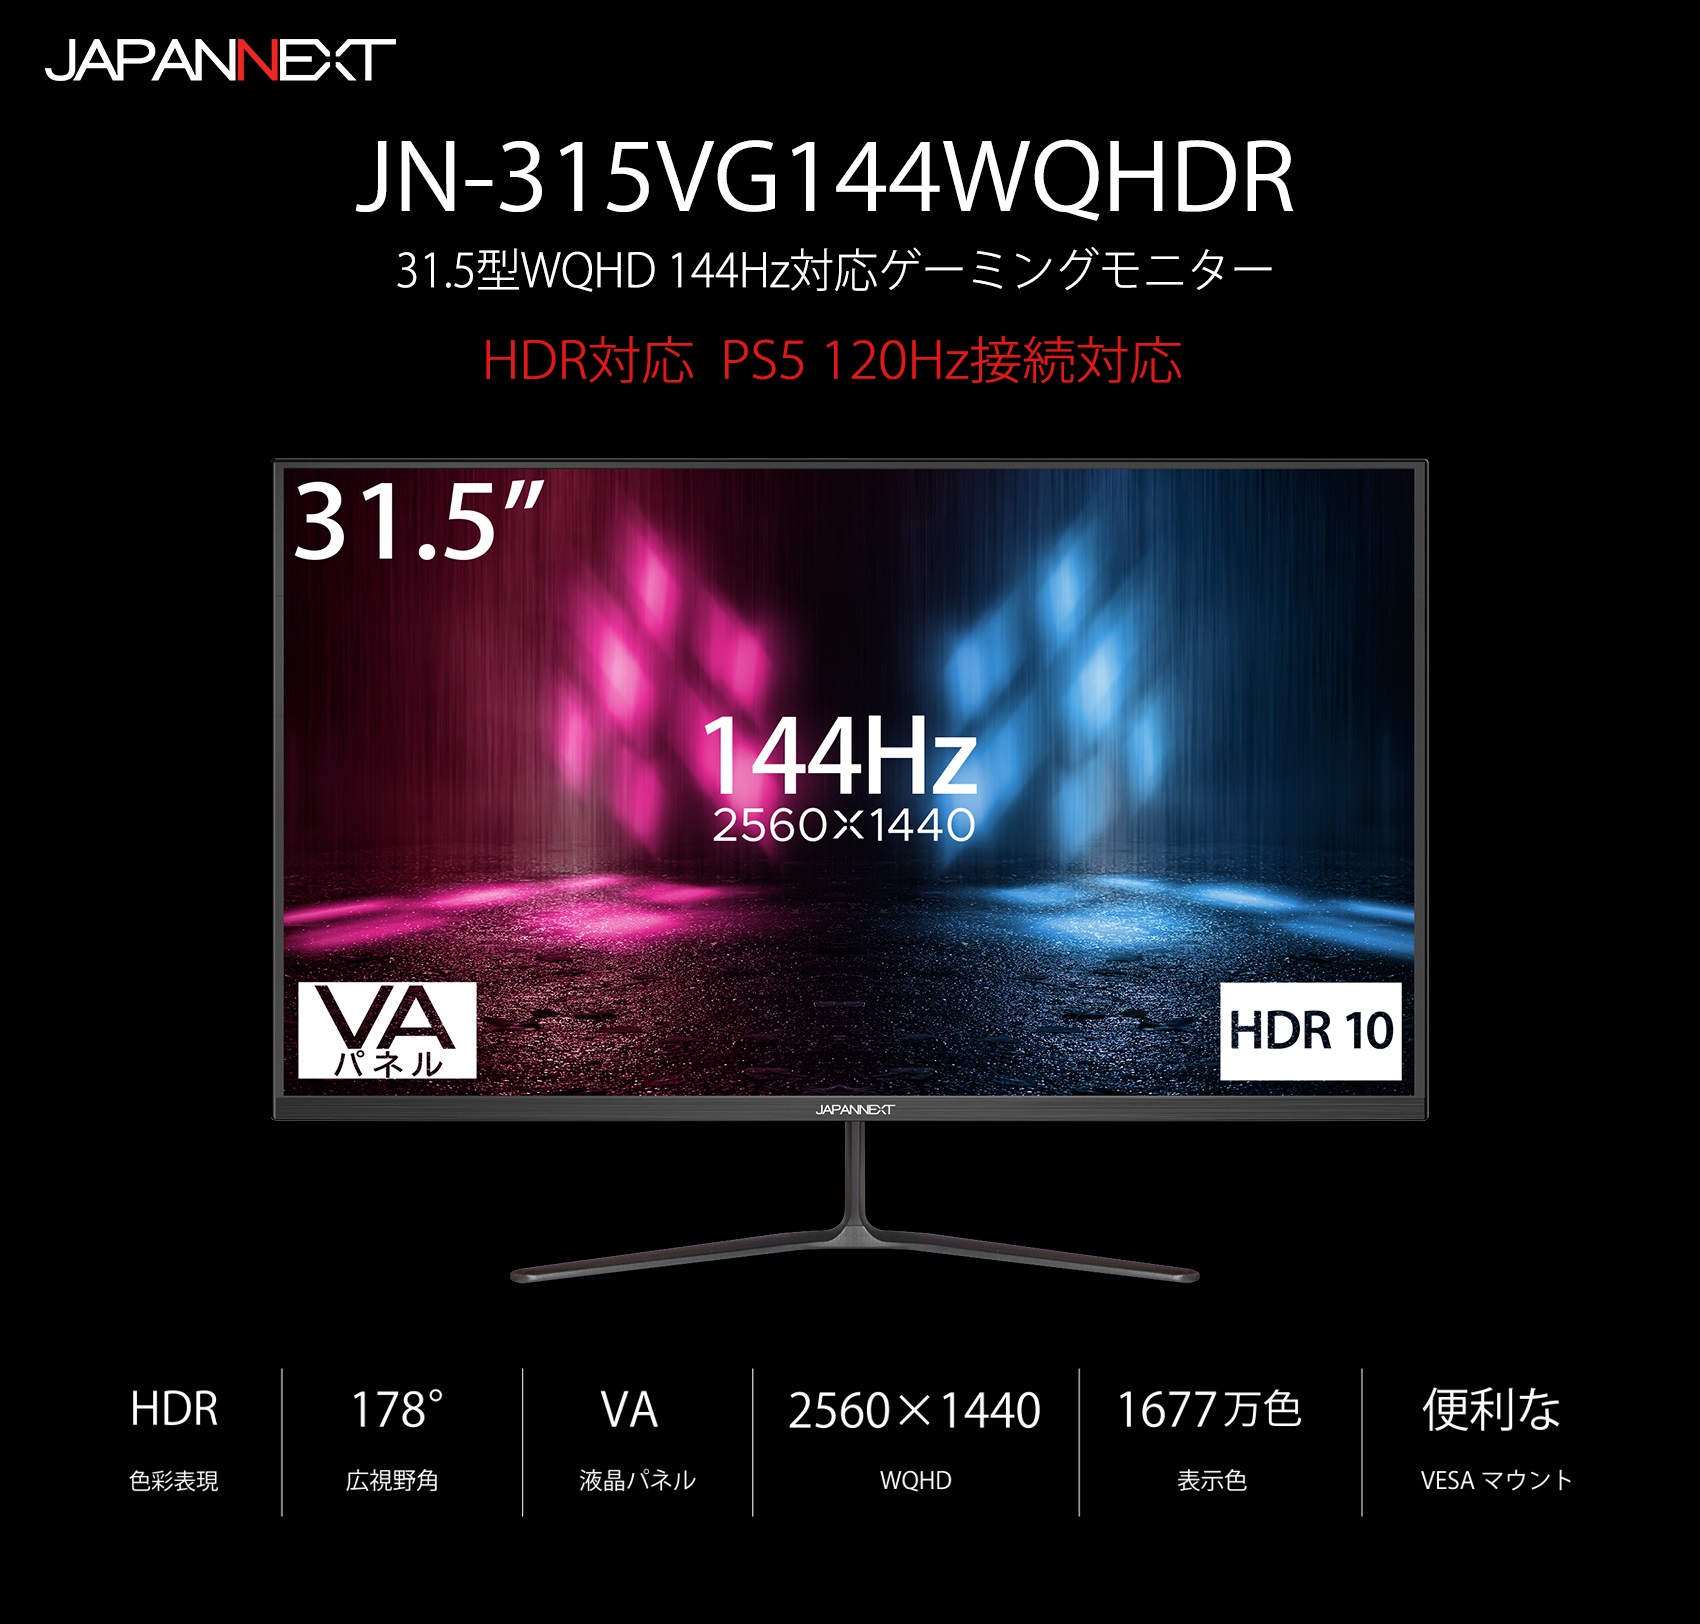 JAPANNEXT 31.5インチ WQHD(2560 x 1440) 144Hz 液晶モニター JN 